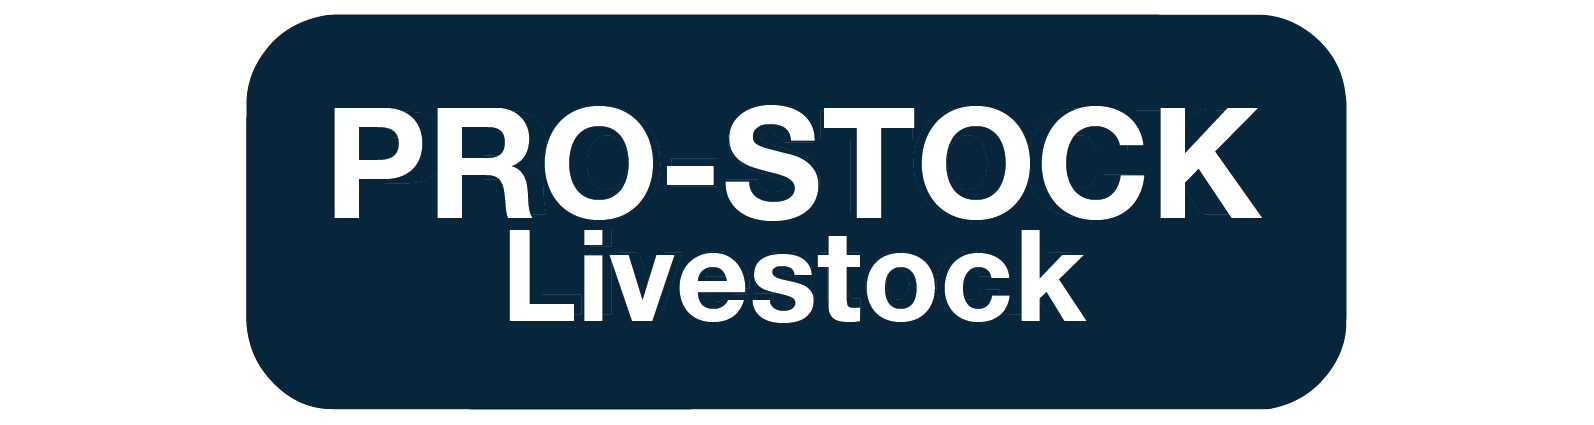 logo-prostock